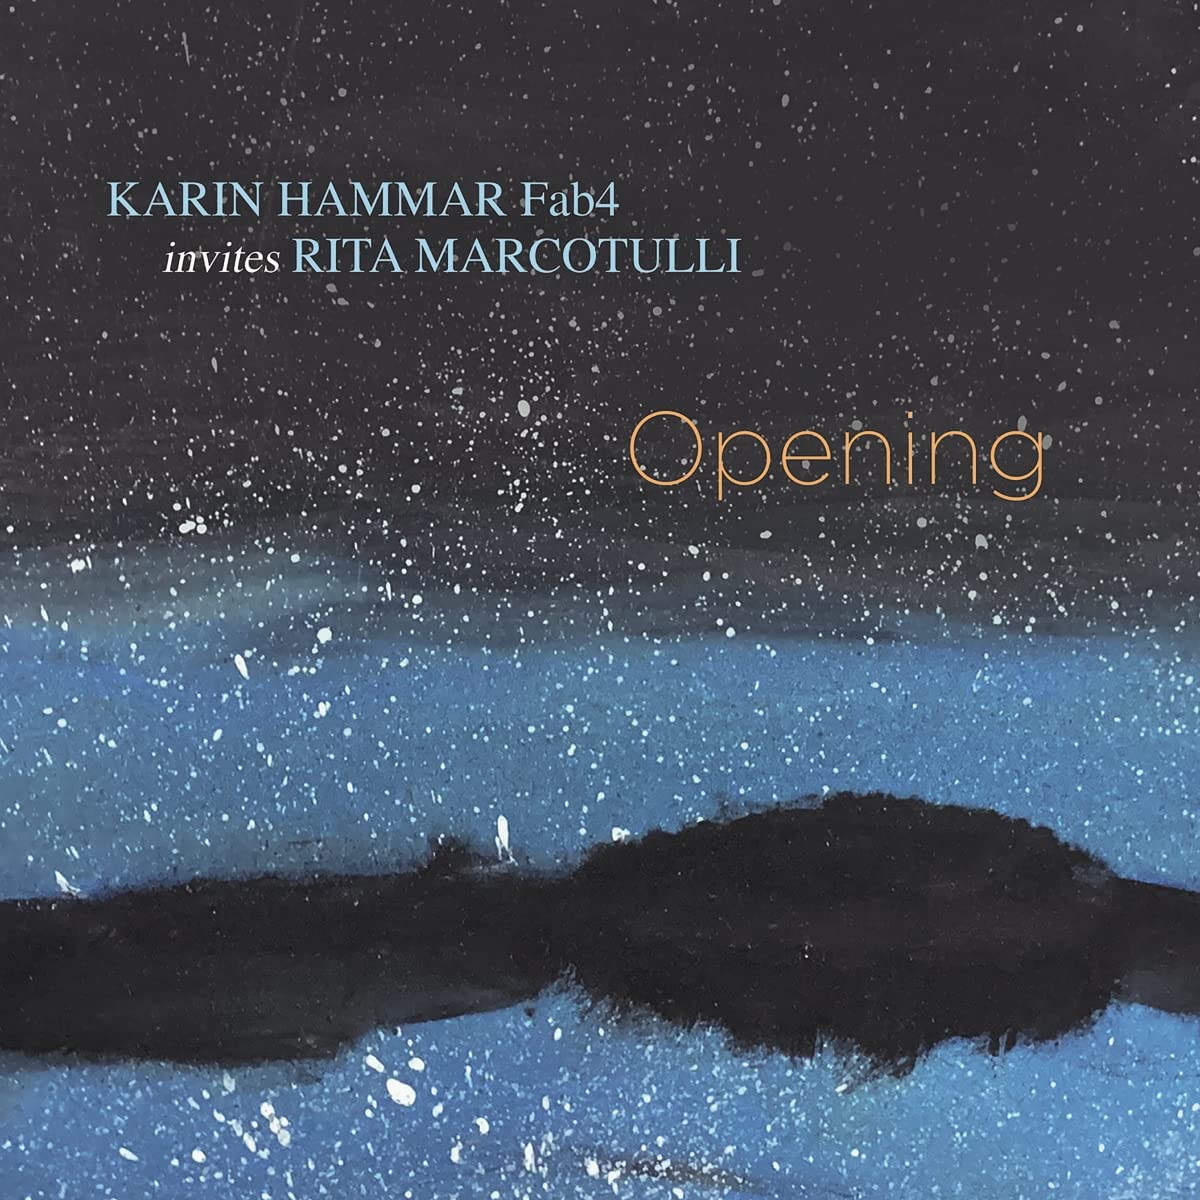 KARIN HAMMAR - Karin Hammar Fab4 invites Rita Marcotulli : Opening cover 